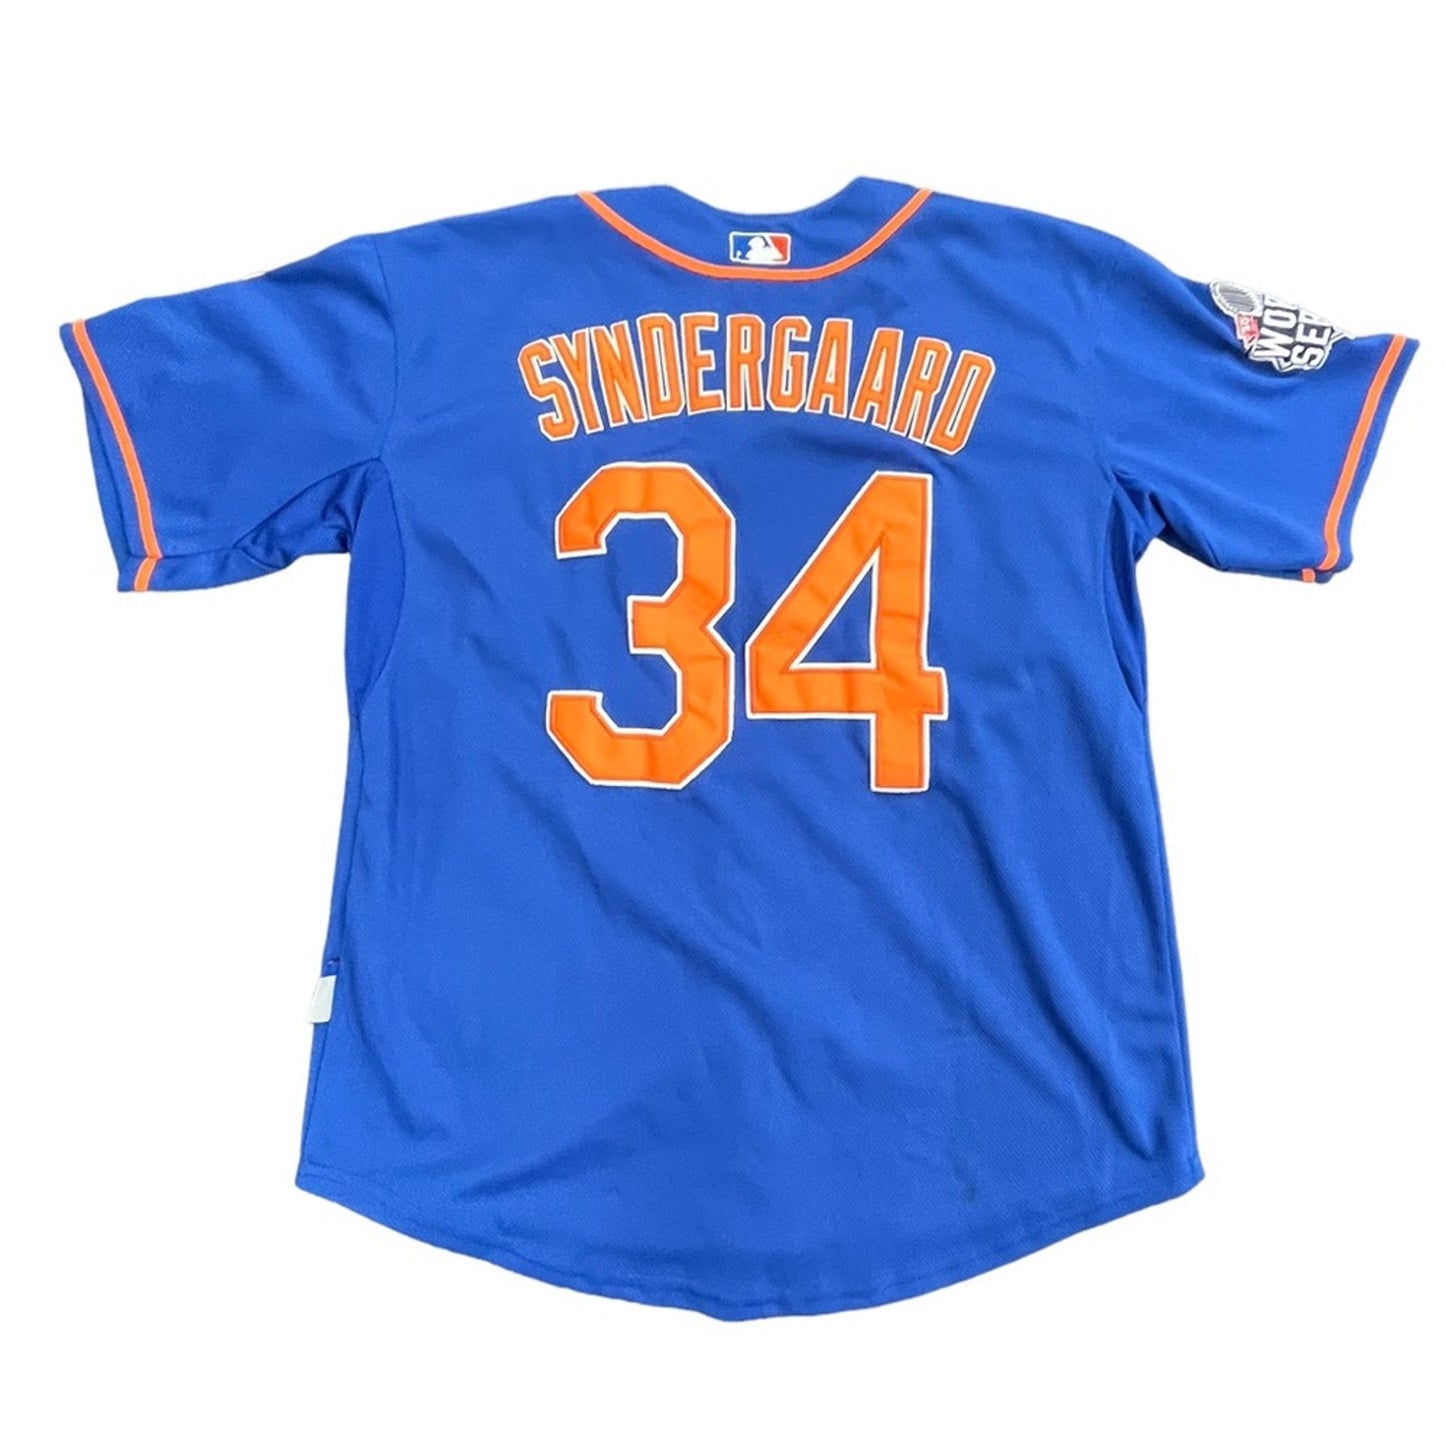 New York Mets MLB Noah Syndergaard World Series Blue Jersey Size 44 Large